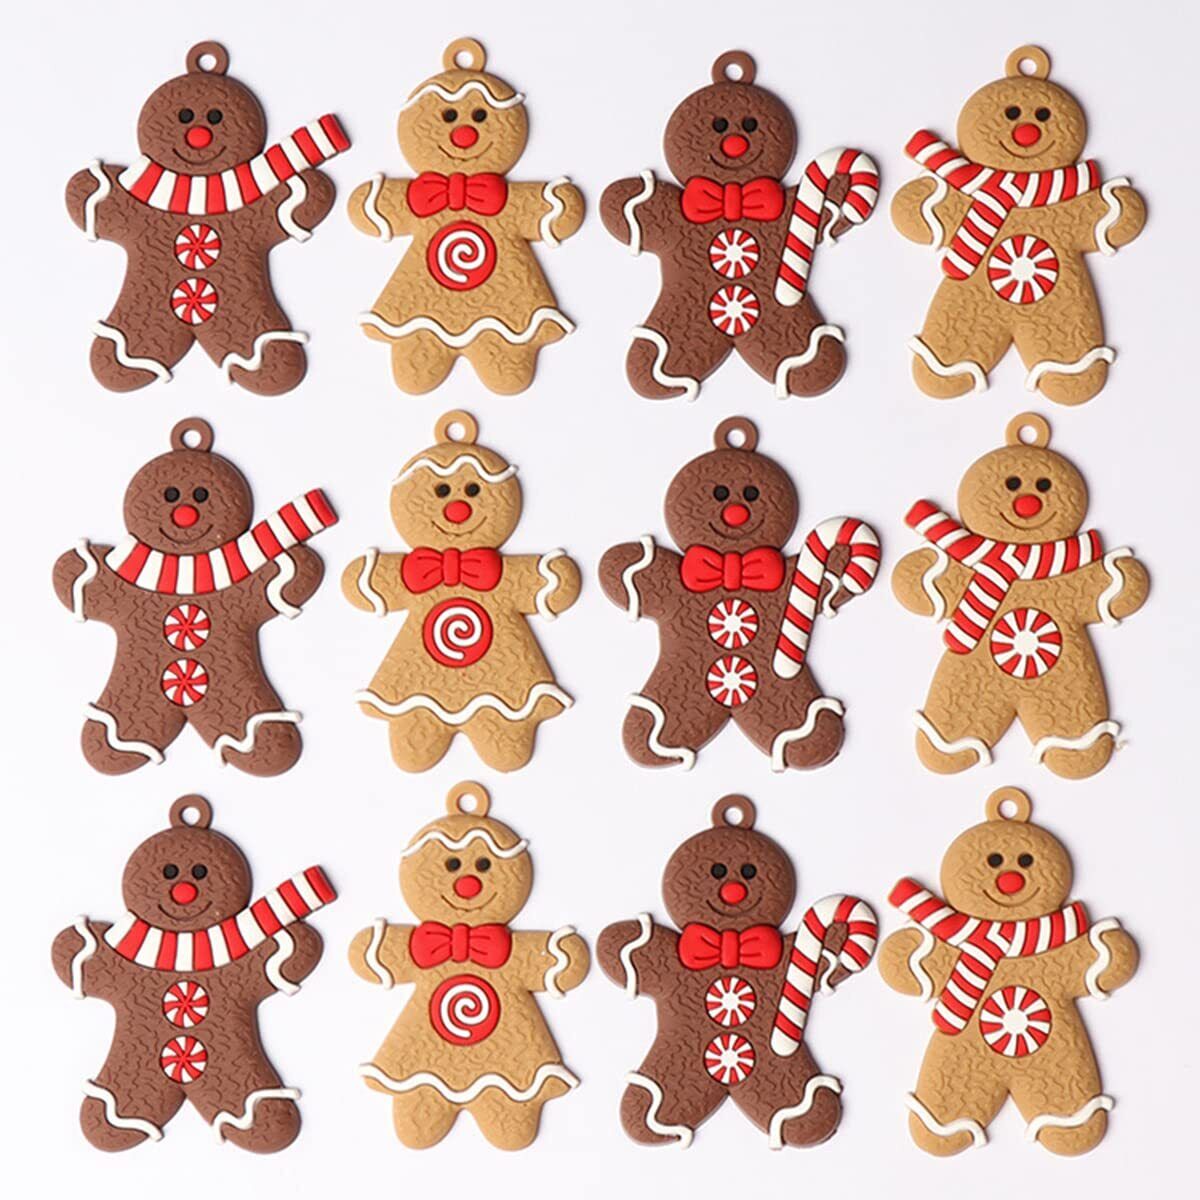 12PCS Christmas Gingerbread Man Ornaments, Craft Supplies, Holiday Decor